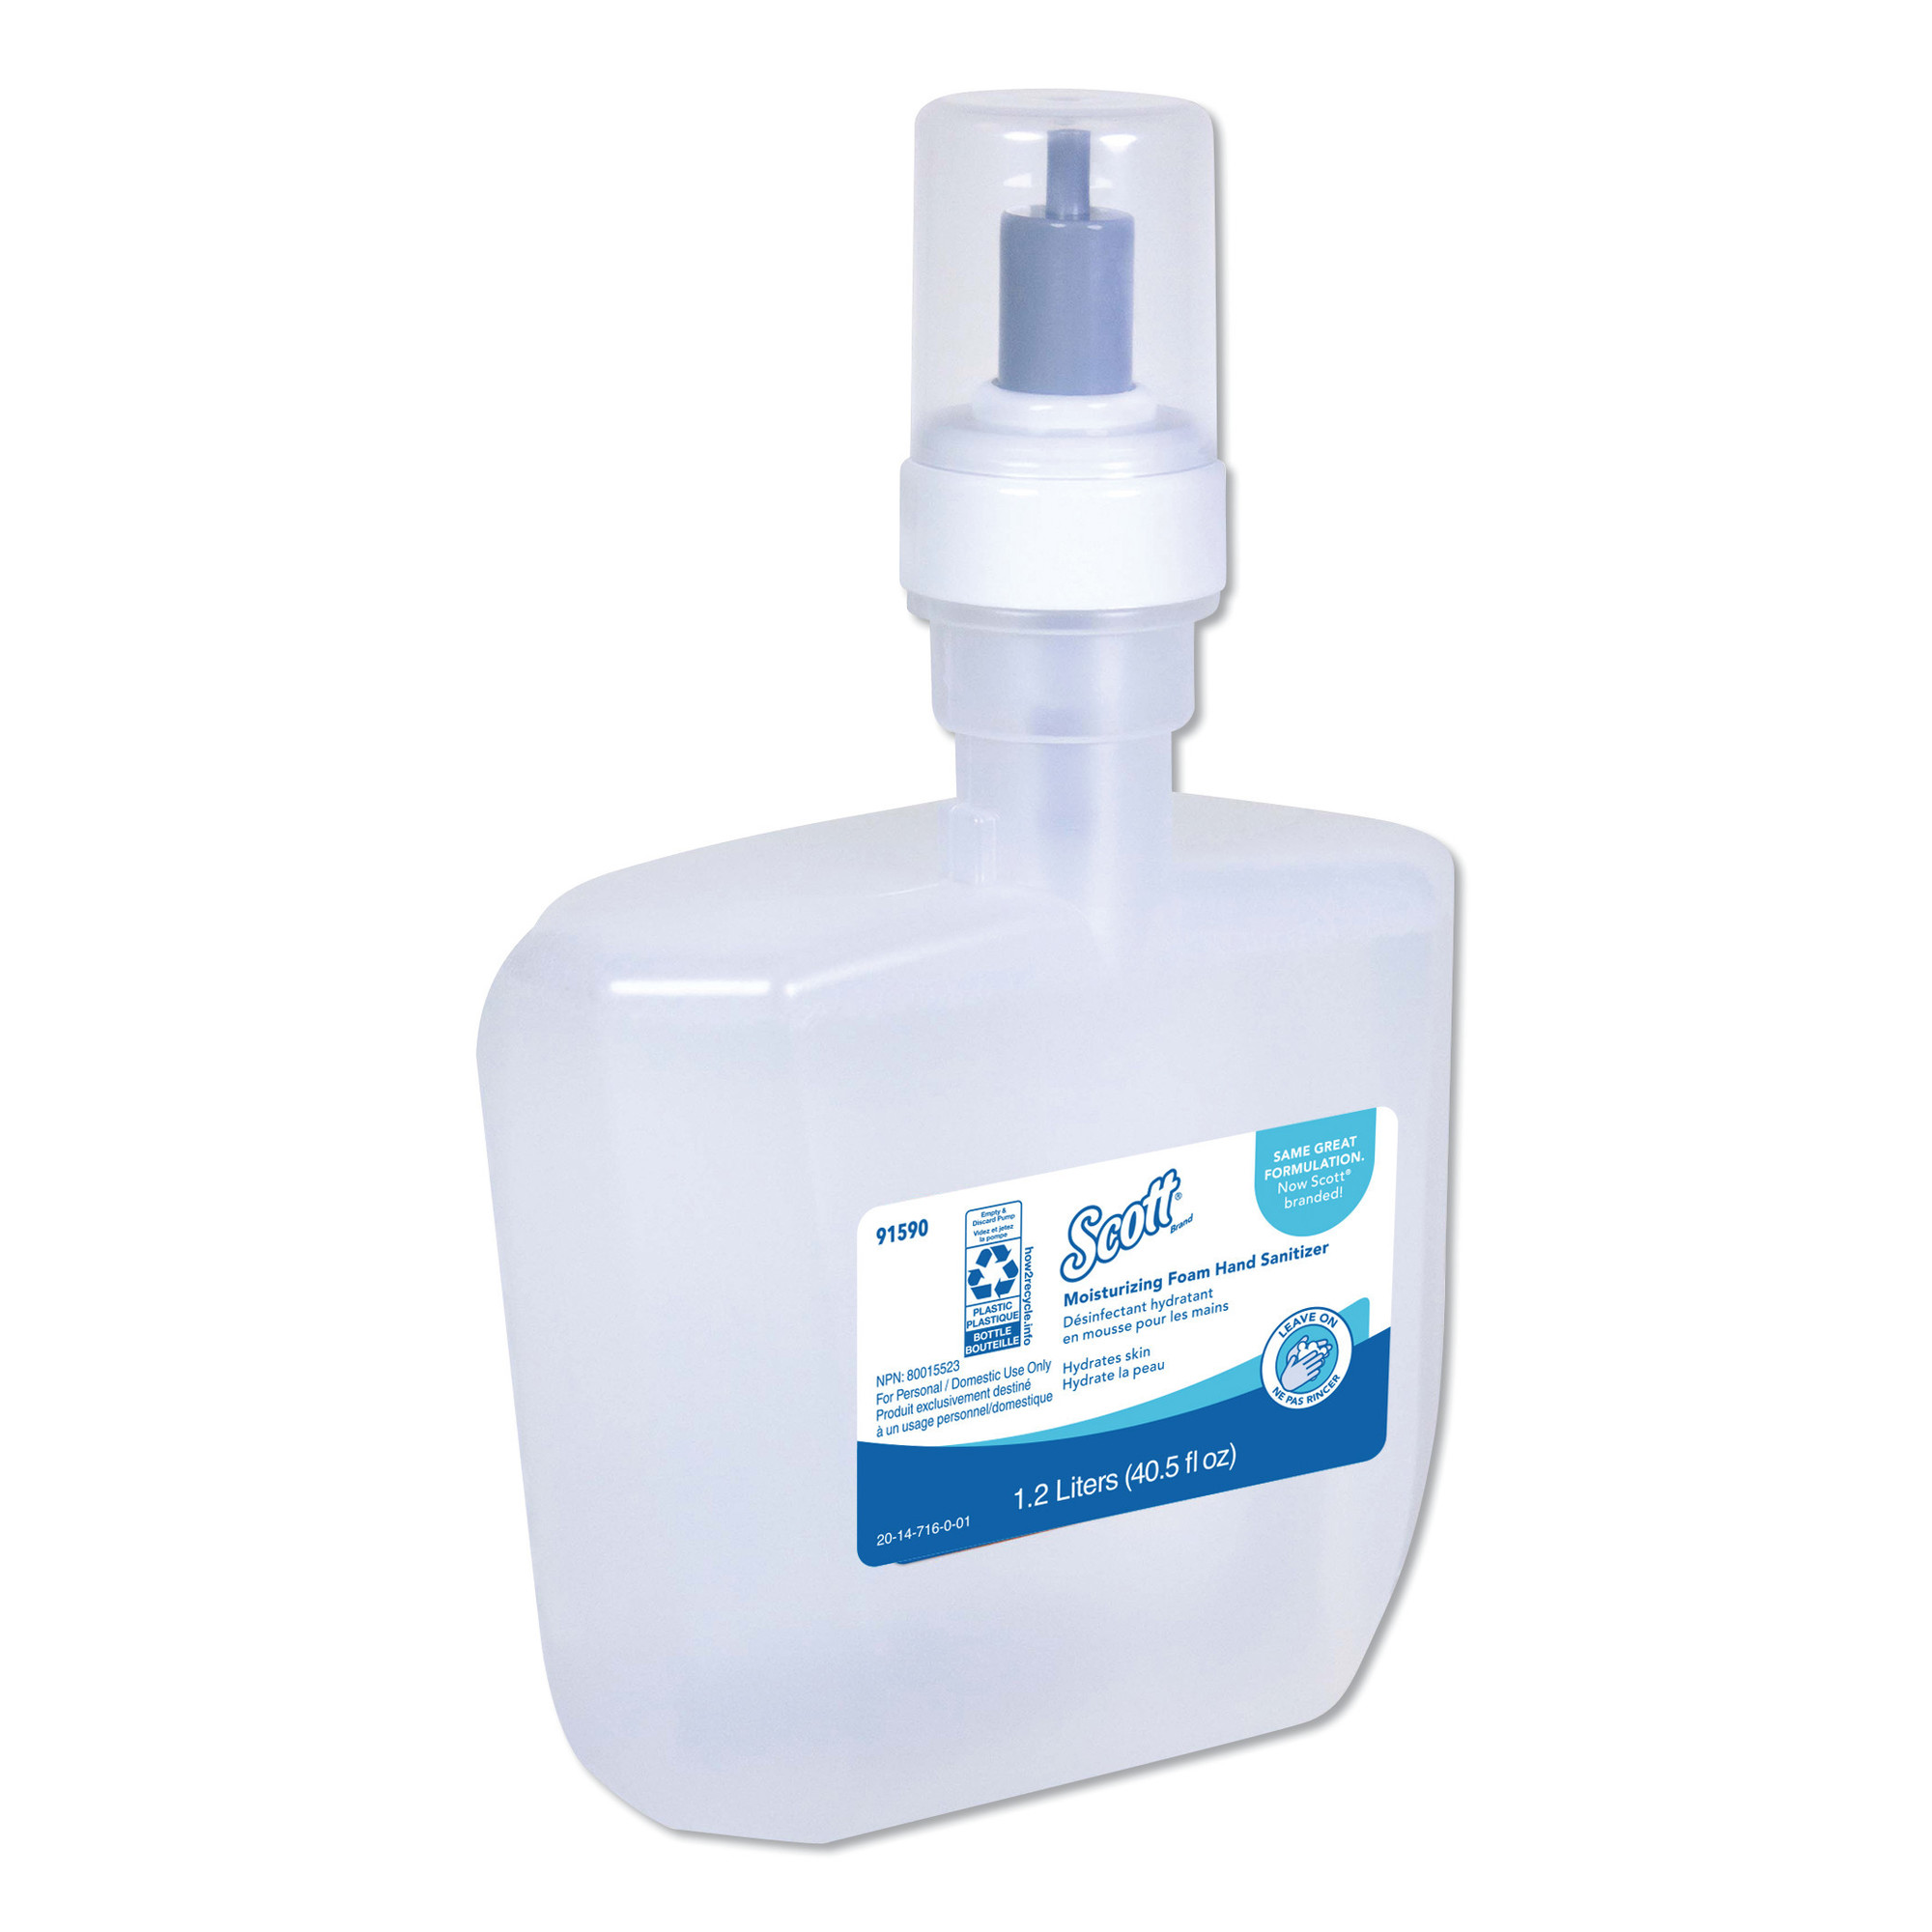 Permatex 33013 14 oz. Fast Orange Hand Cleaner Smooth Cream Formula Tub